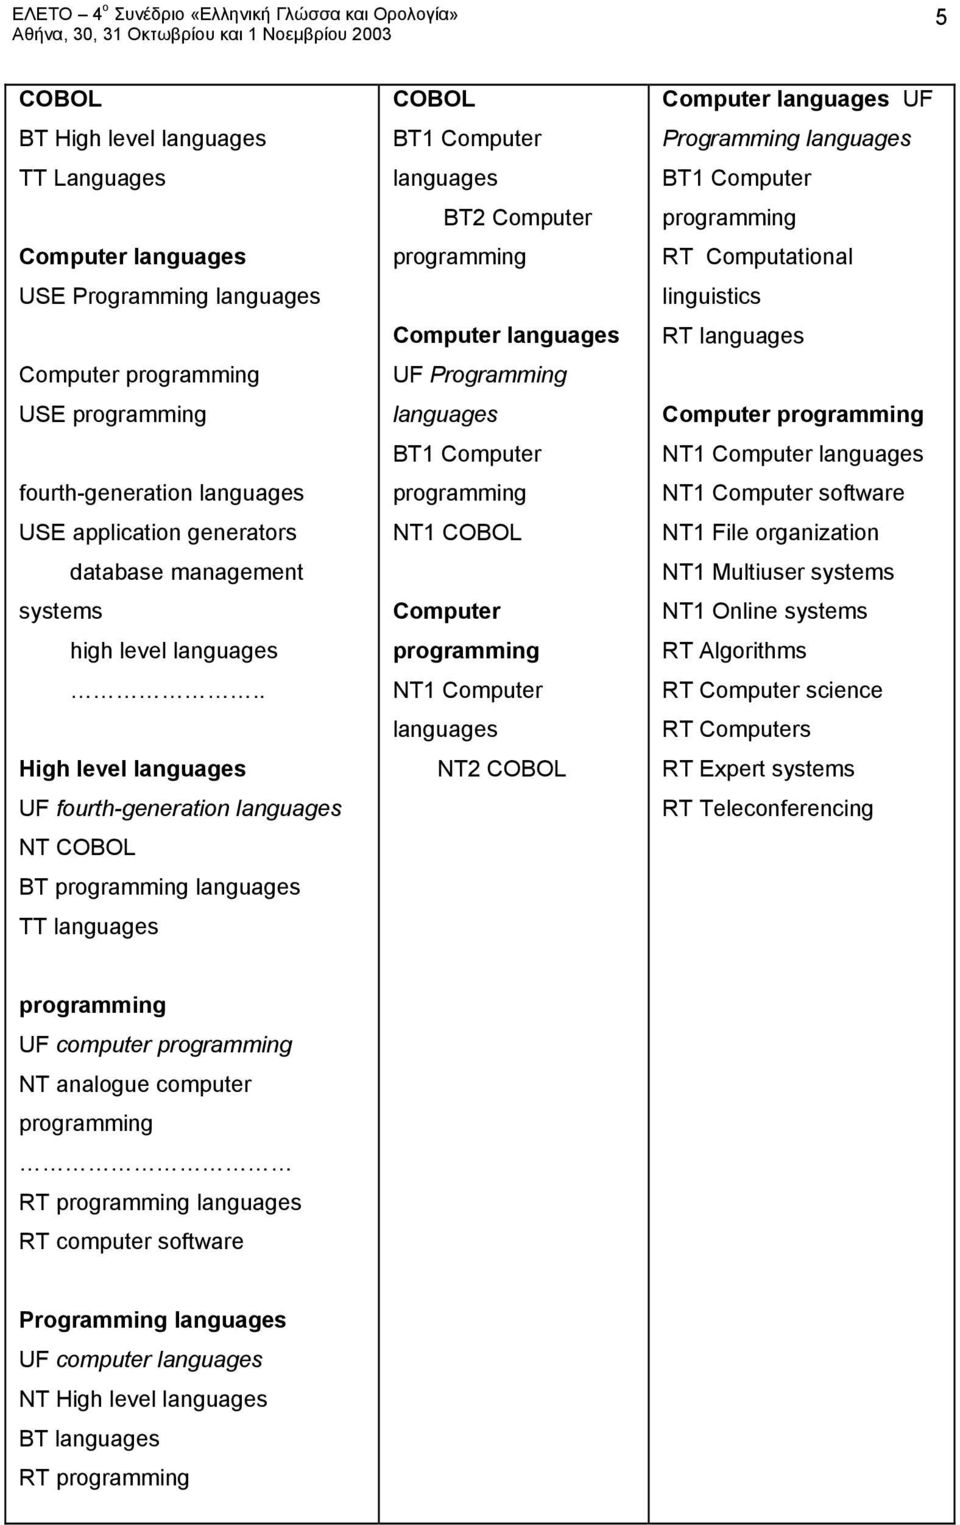 . High level languages UF fourth-generation languages NT COBOL BT languages TT languages COBOL BT1 Computer languages BT2 Computer Computer languages UF Programming languages BT1 Computer NT1 COBOL